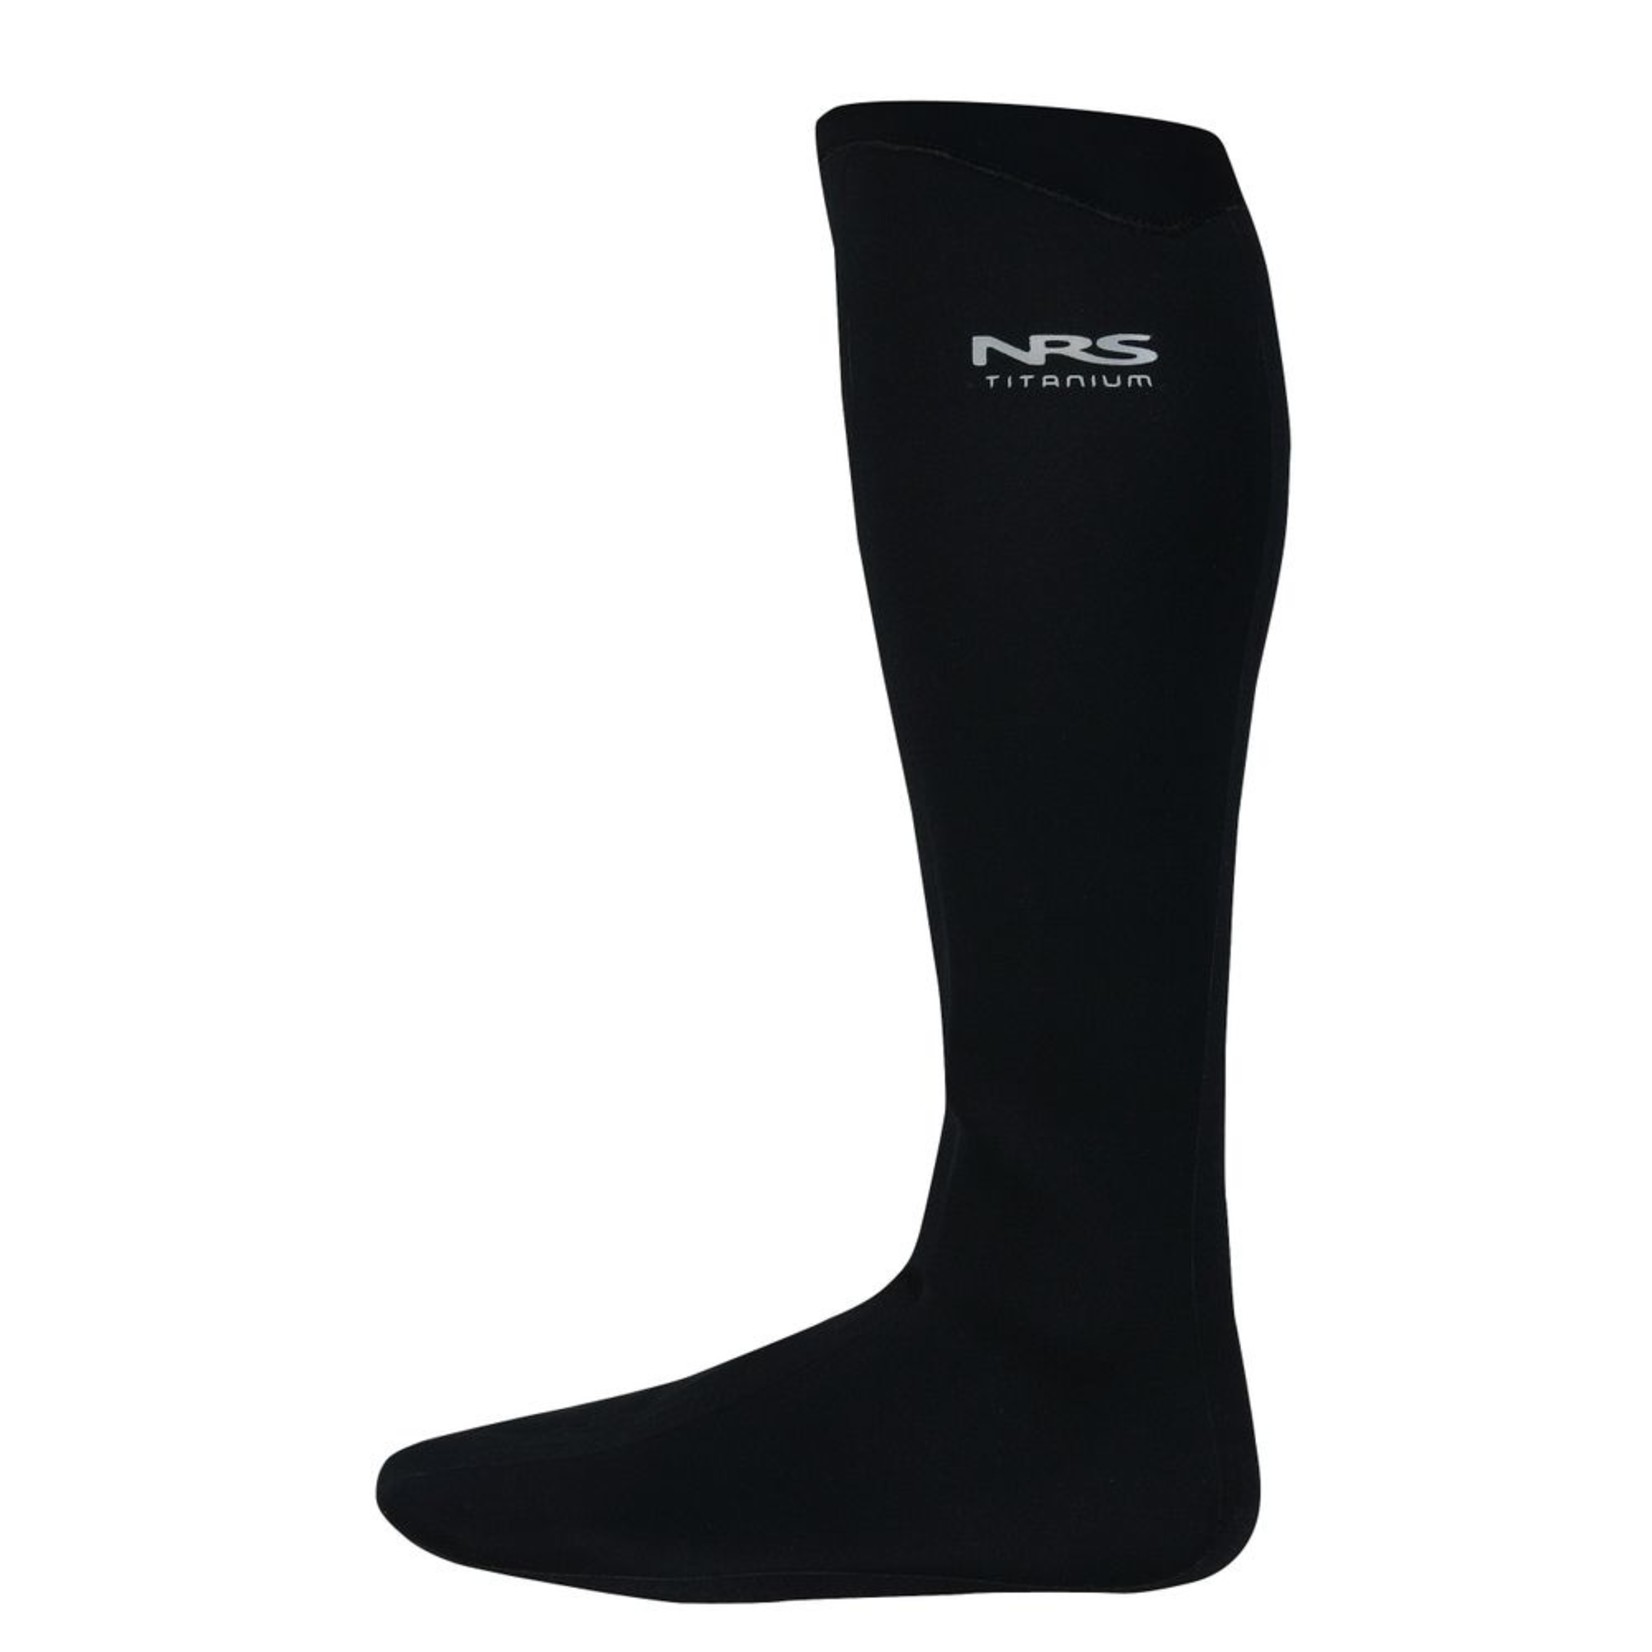 NRS NRS Boundary Socks with HydroCuff